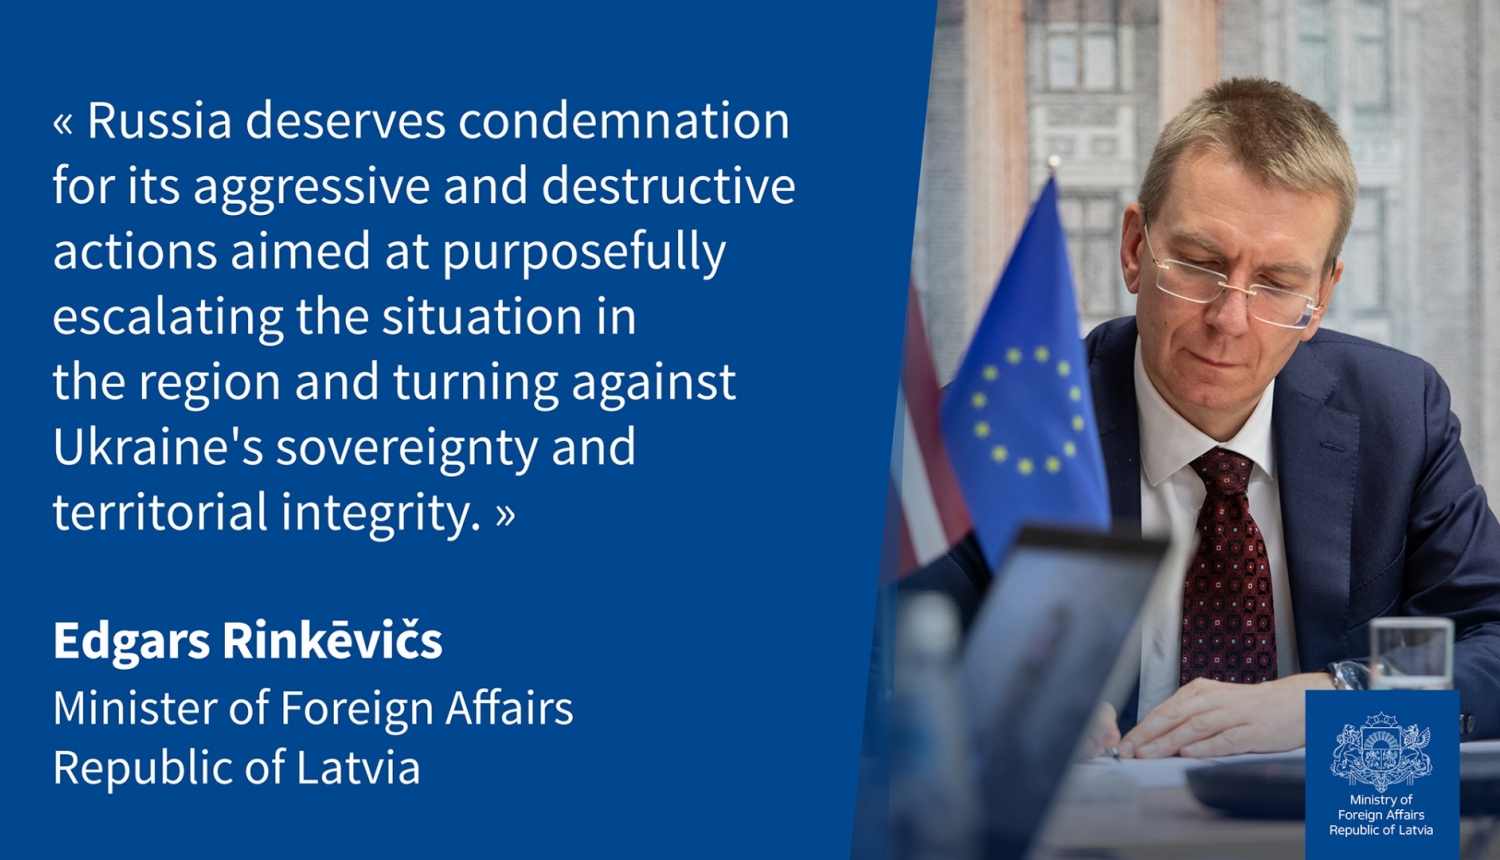 Edgars Rinkēvičs calls for immediately launching an EU sanctions procedure against Russia